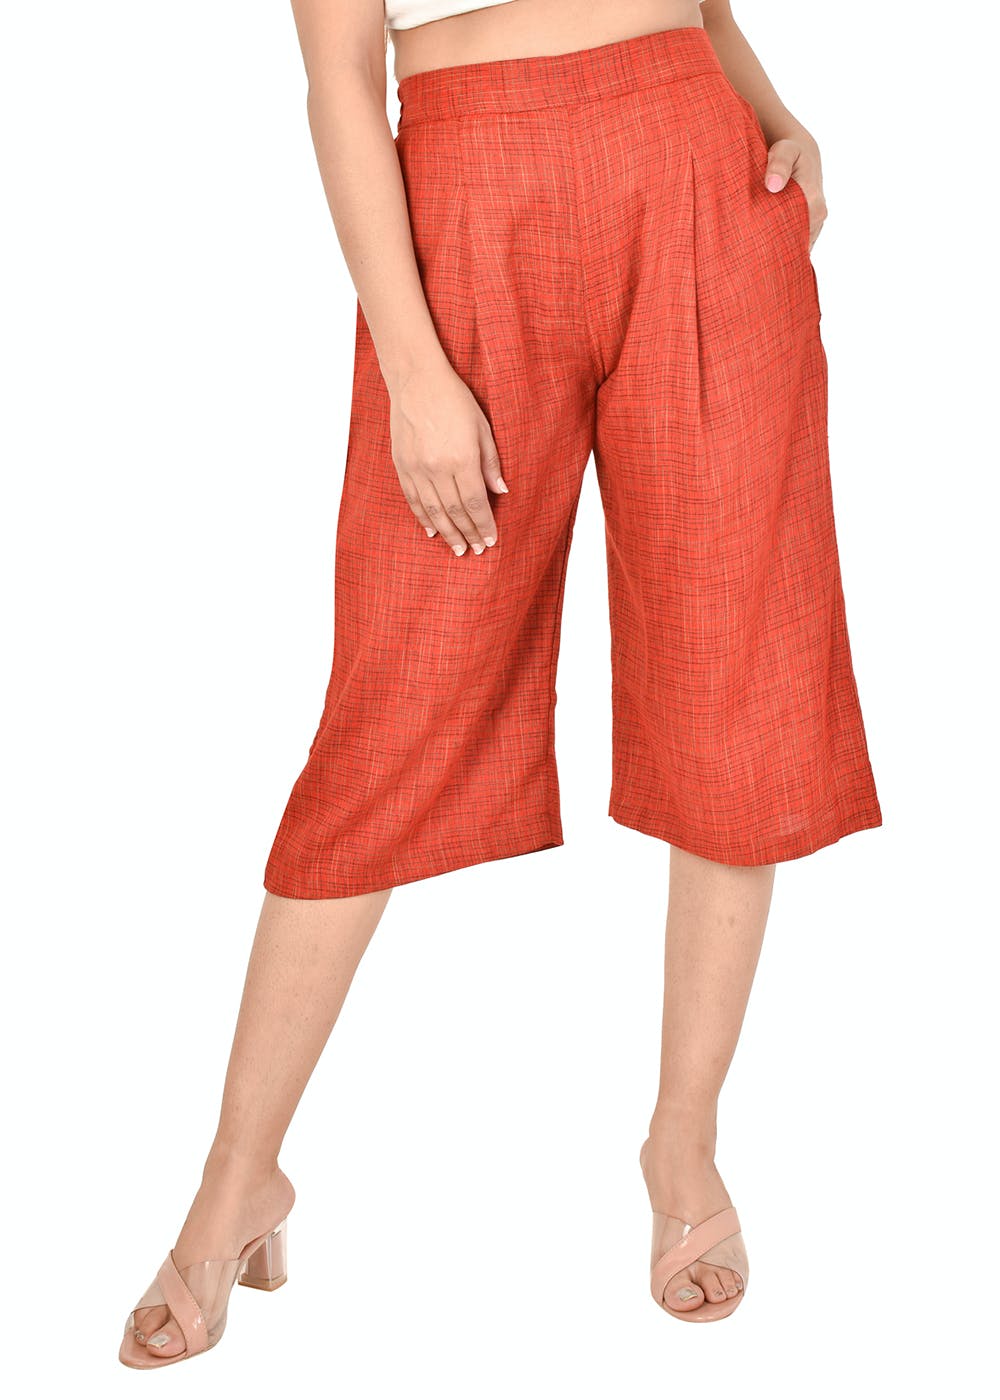 Buy SSoShHub Men's Casual Chino Cotton Shorts Half Pant 6 Pocket Cotton  Shorts Beige at Amazon.in